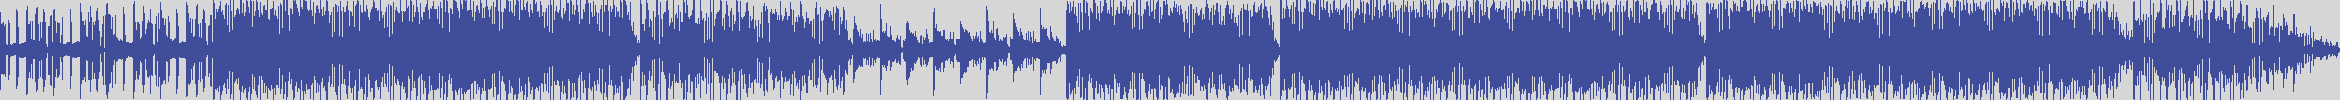 noclouds_chillout [NOC138] Titus Koibra - Bright Future [Chillout River Mix] audio wave form